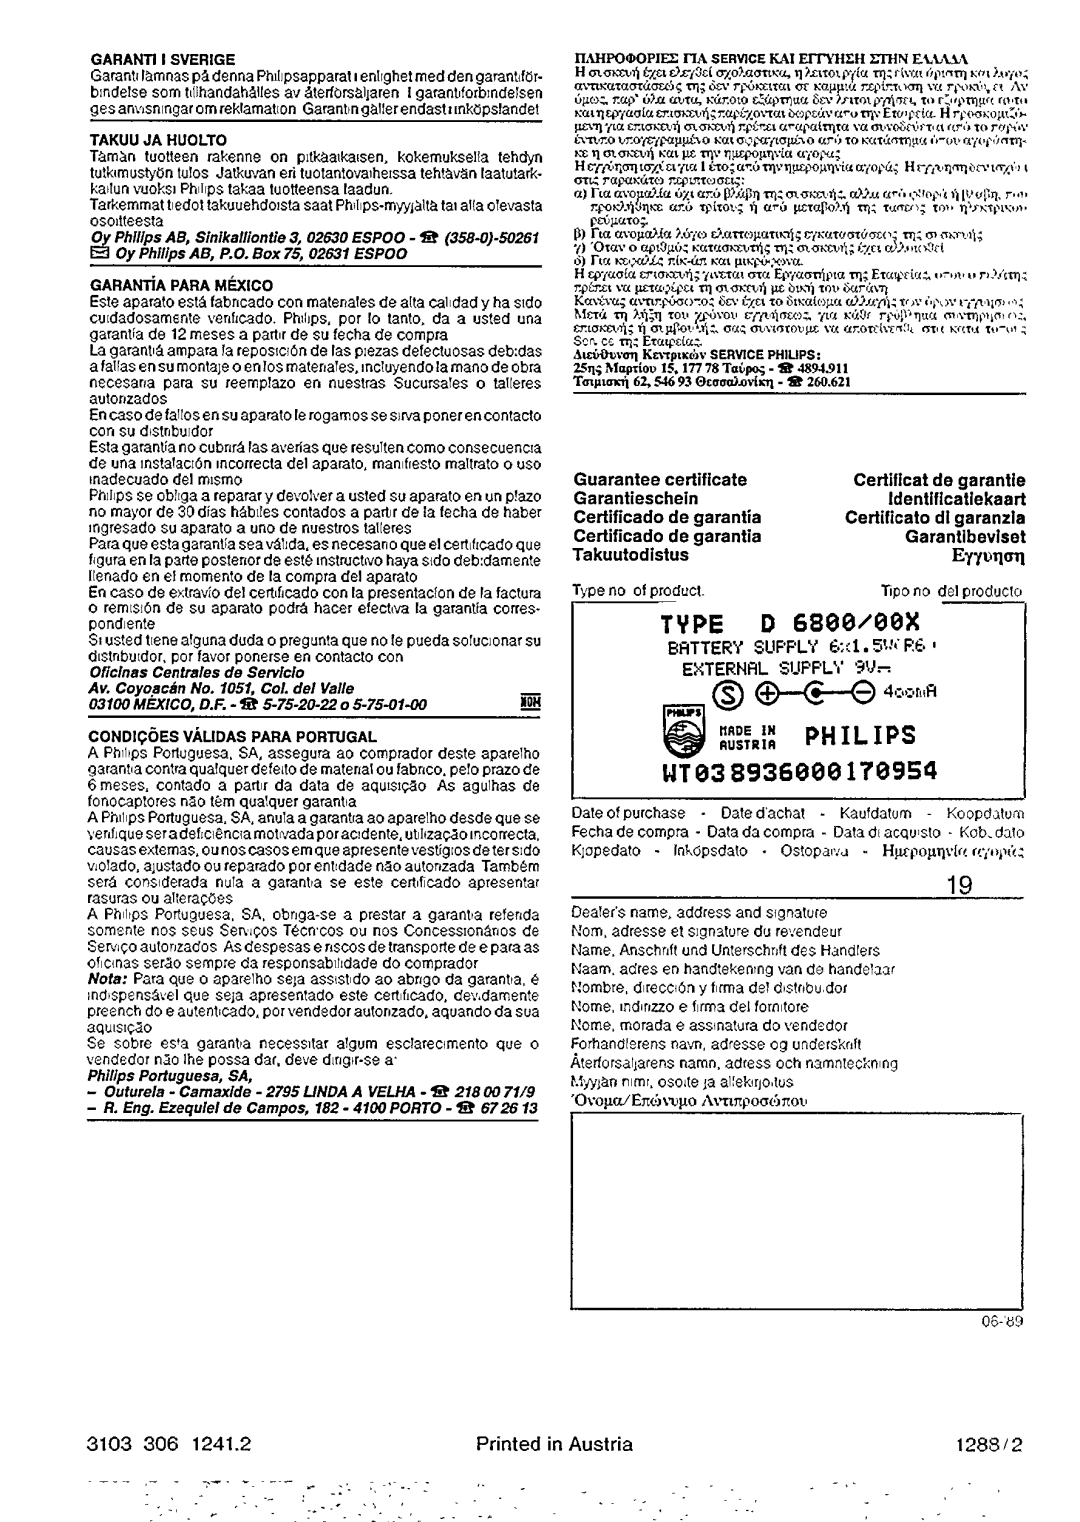 Philips D 6800x manual 